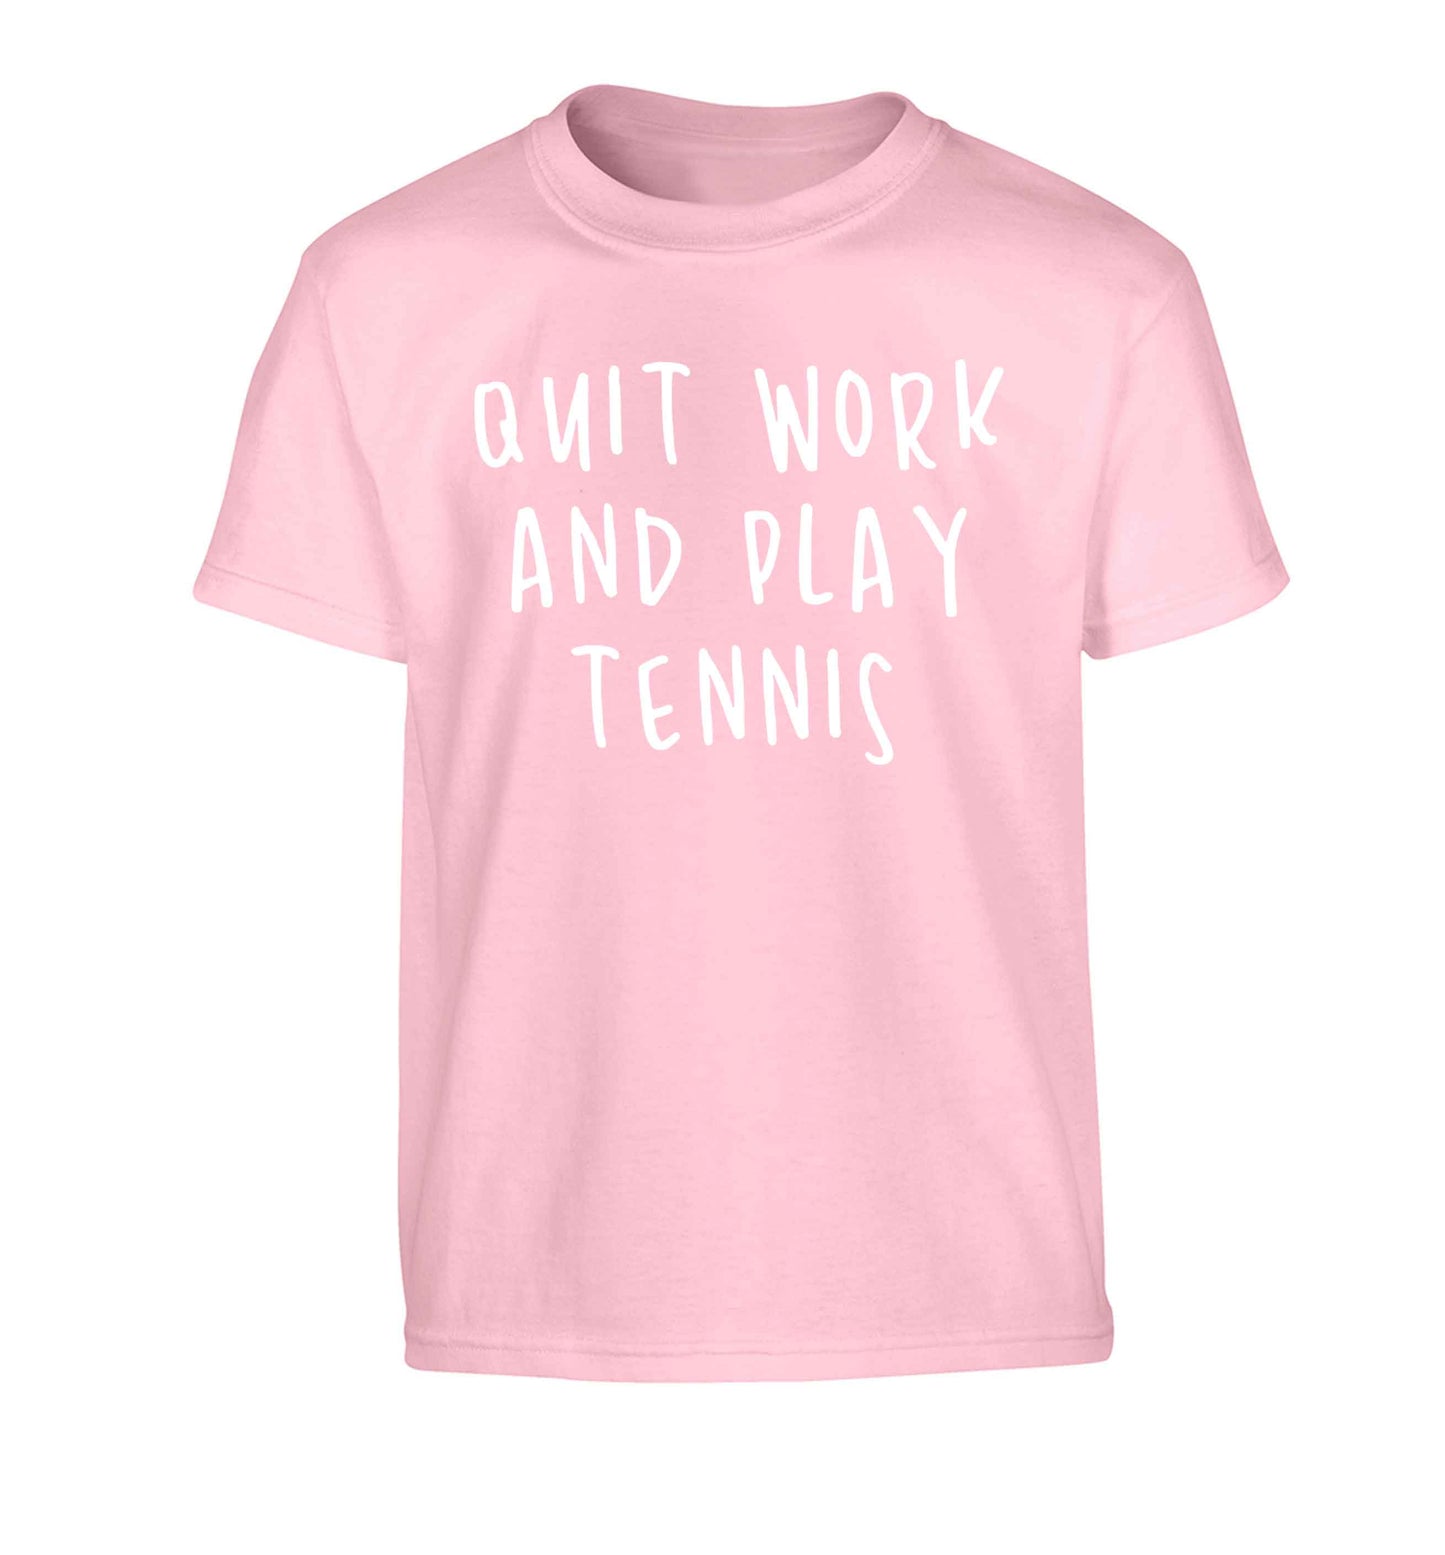 Quit work and play tennis Children's light pink Tshirt 12-13 Years